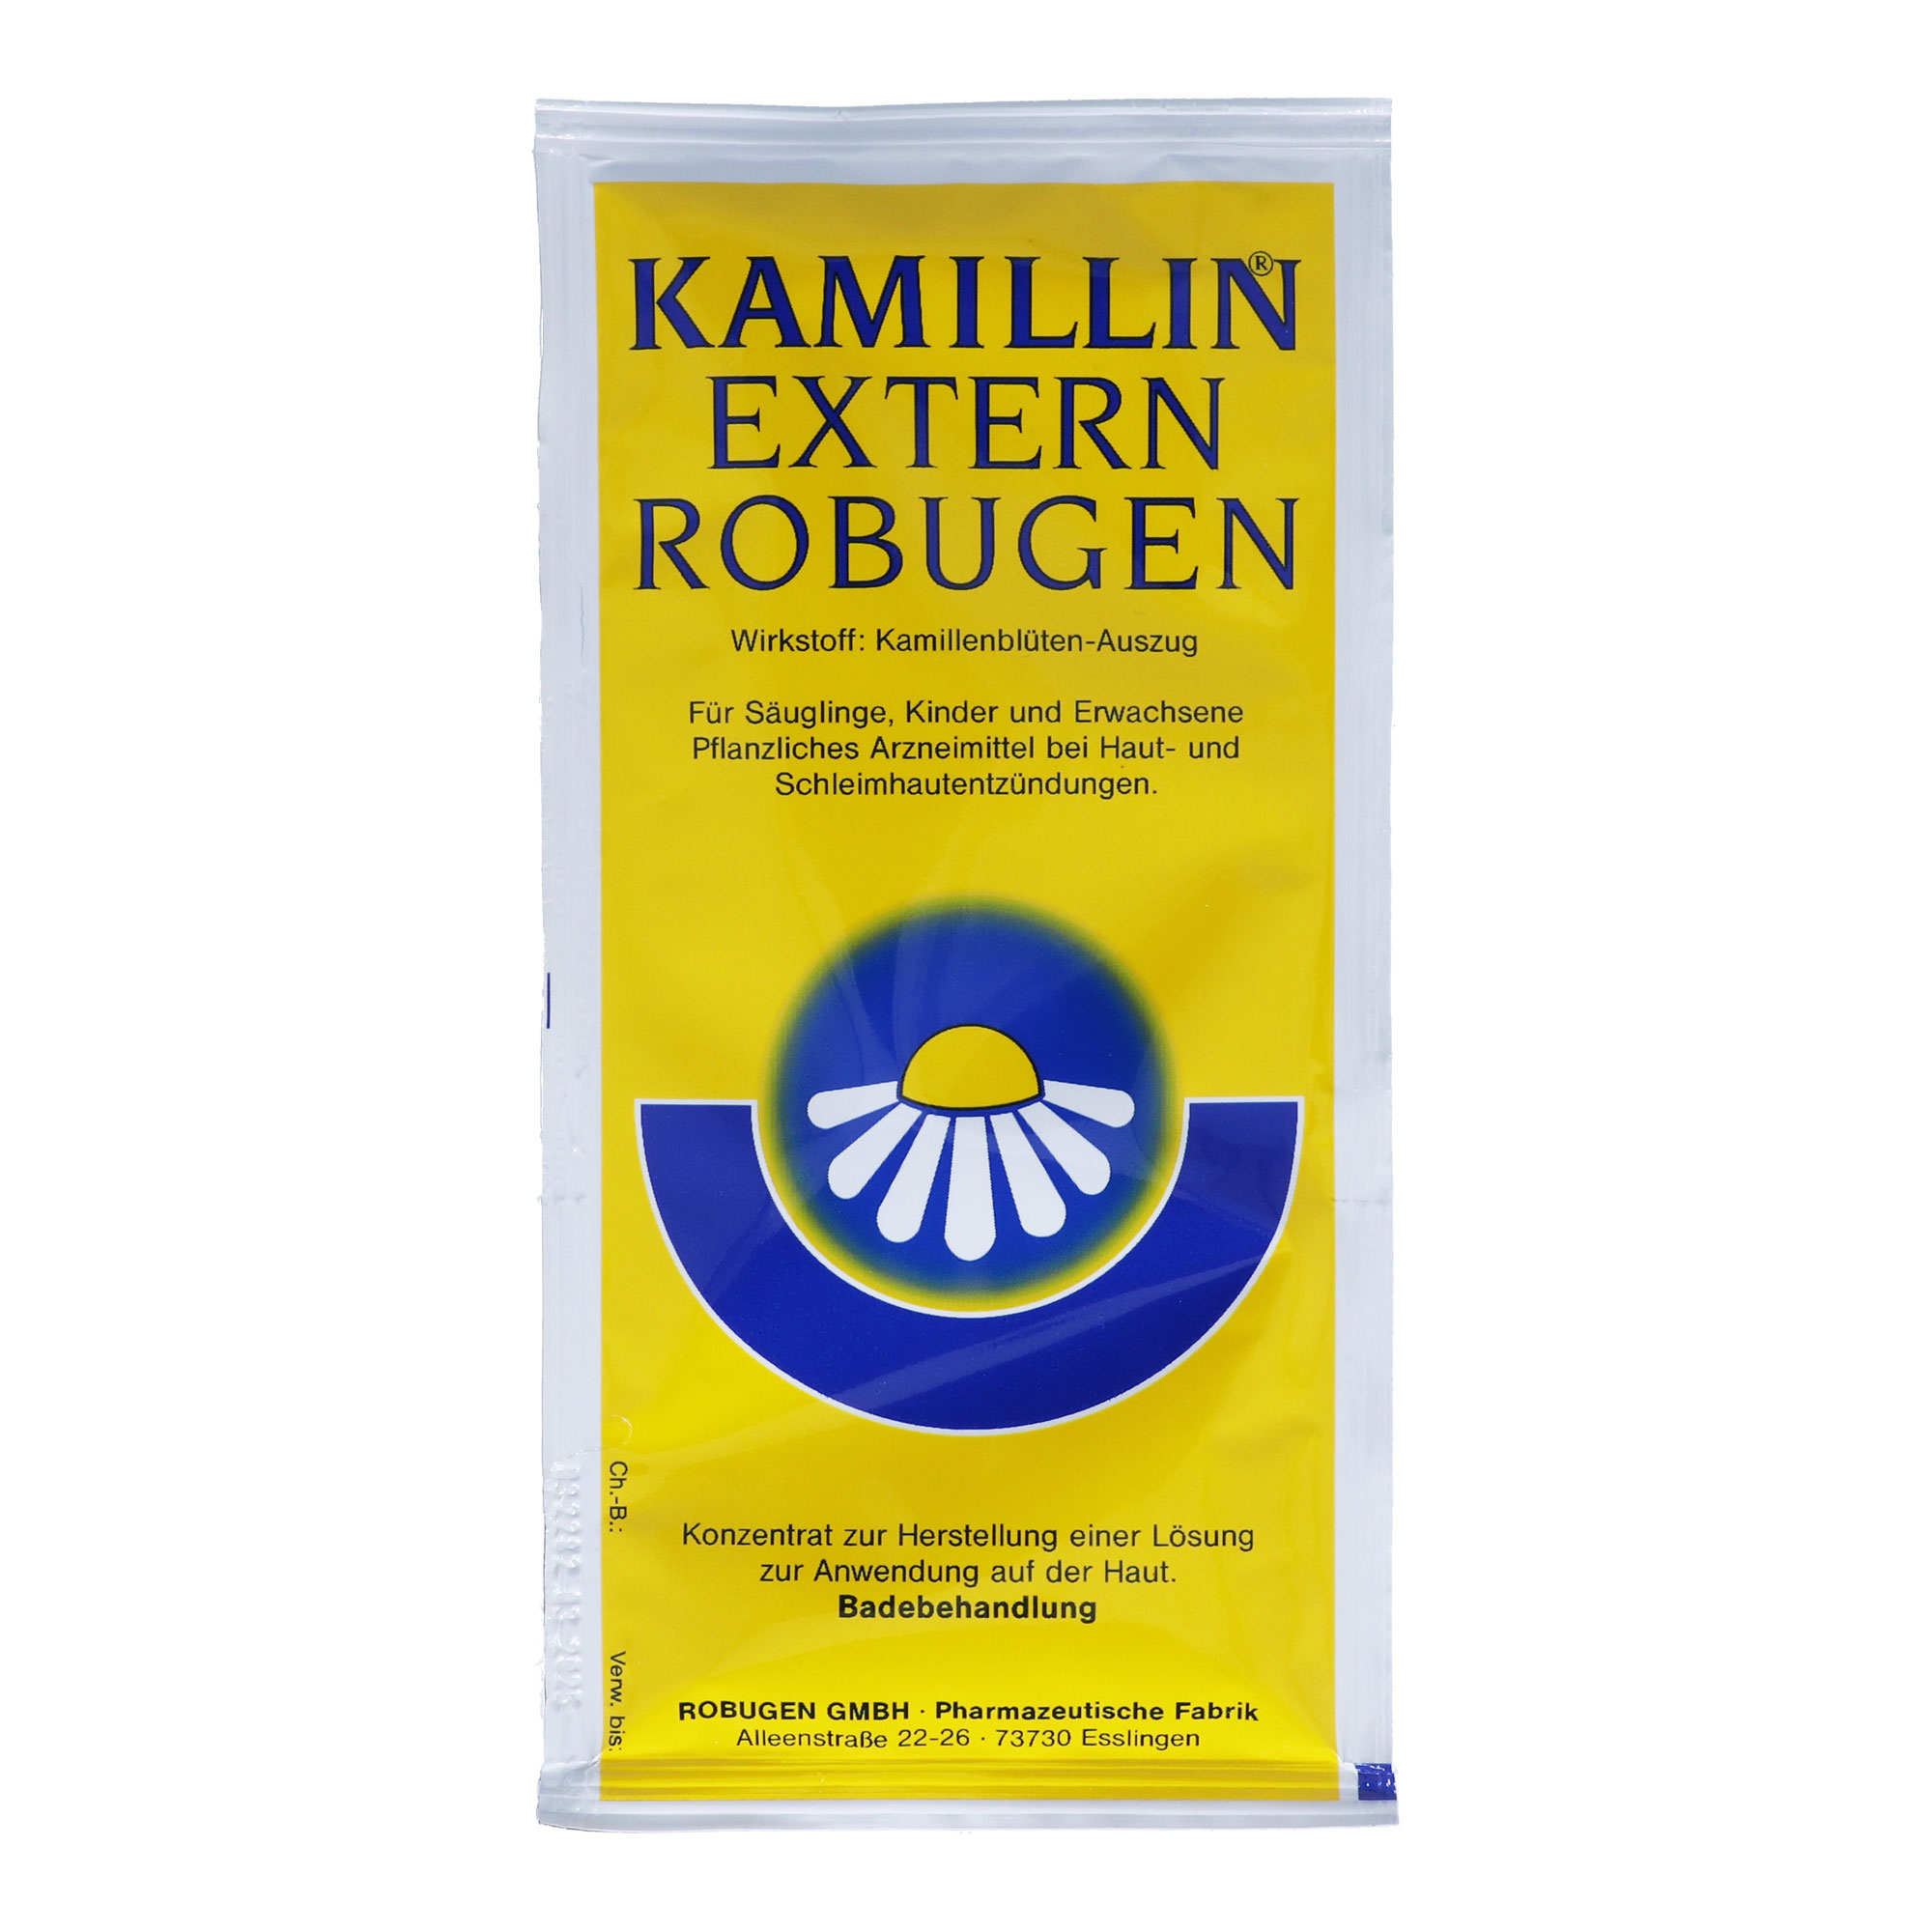 Kamillin Extern Robugen Konzentrat